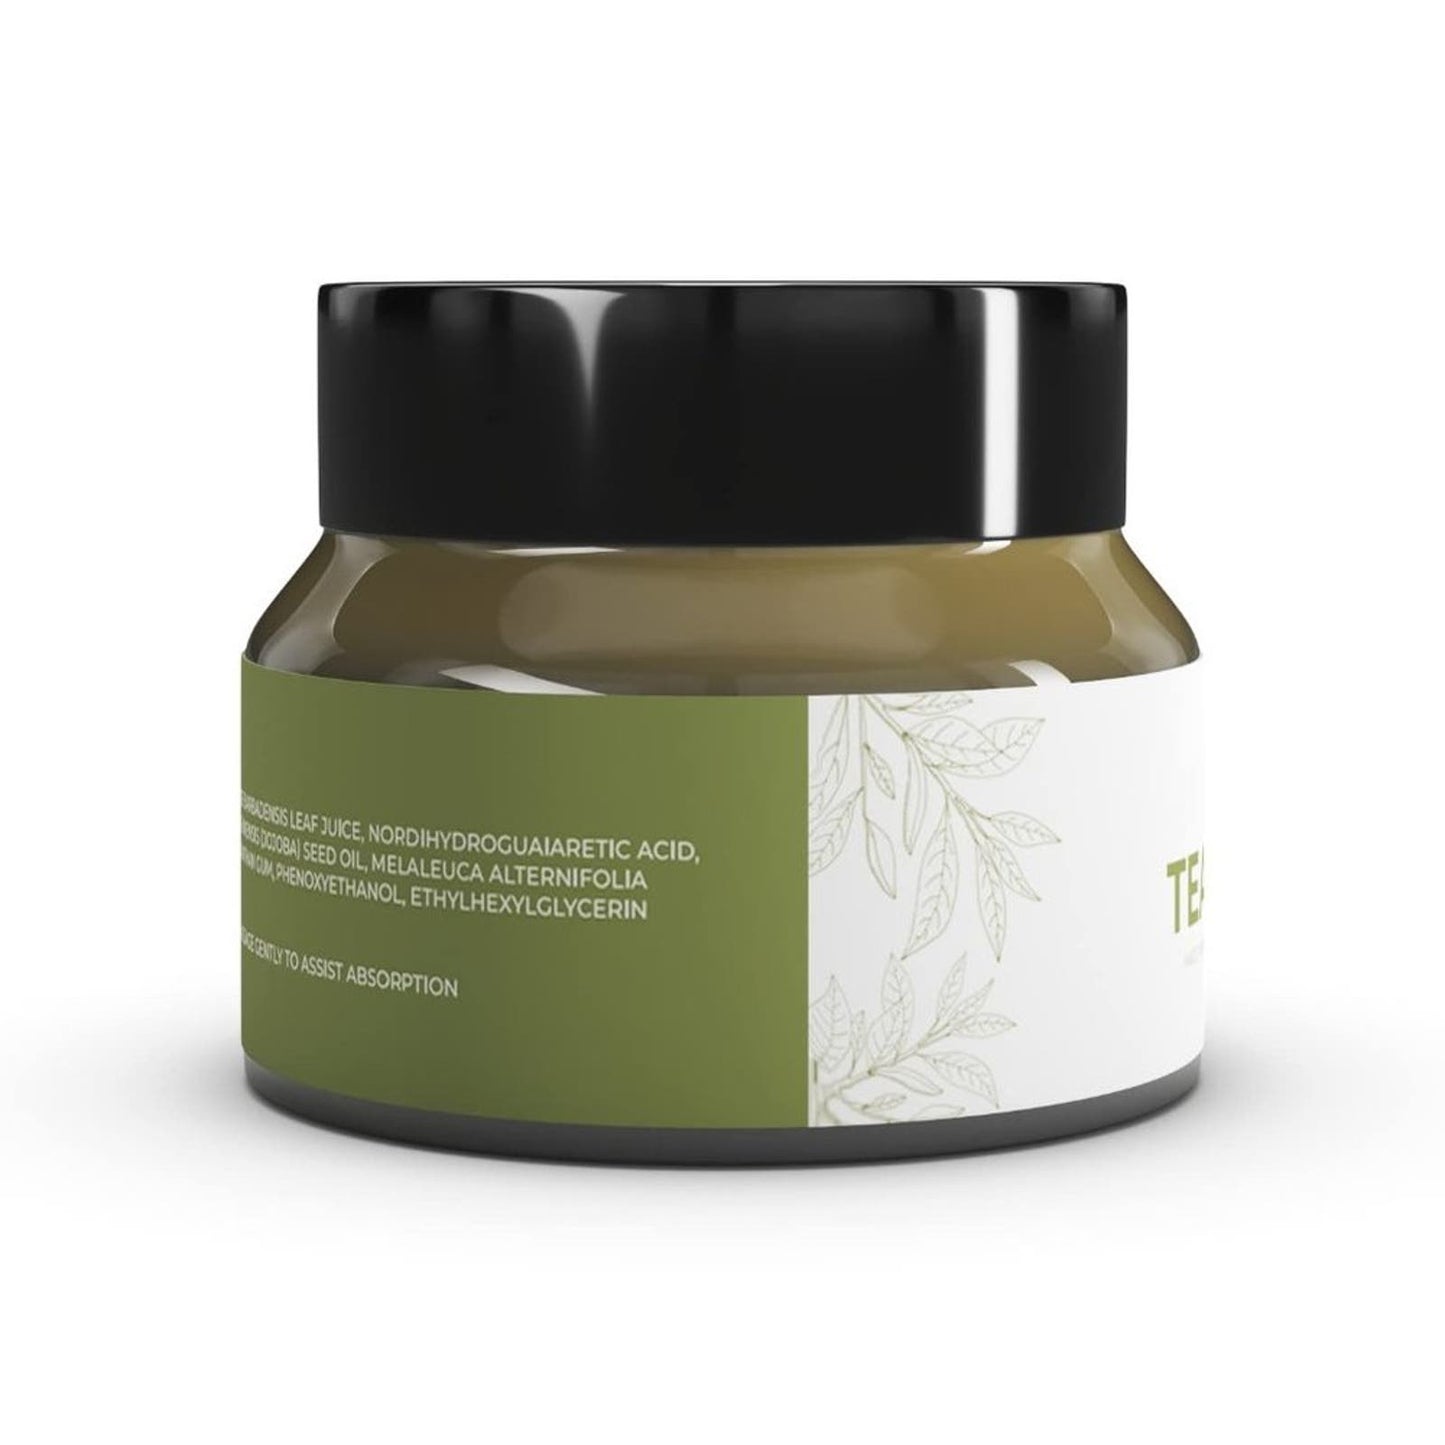 Brandnu Tea Tree Face Cream - Moisturizer for Acne-Prone, Sensitive Skin, 1.7 oz